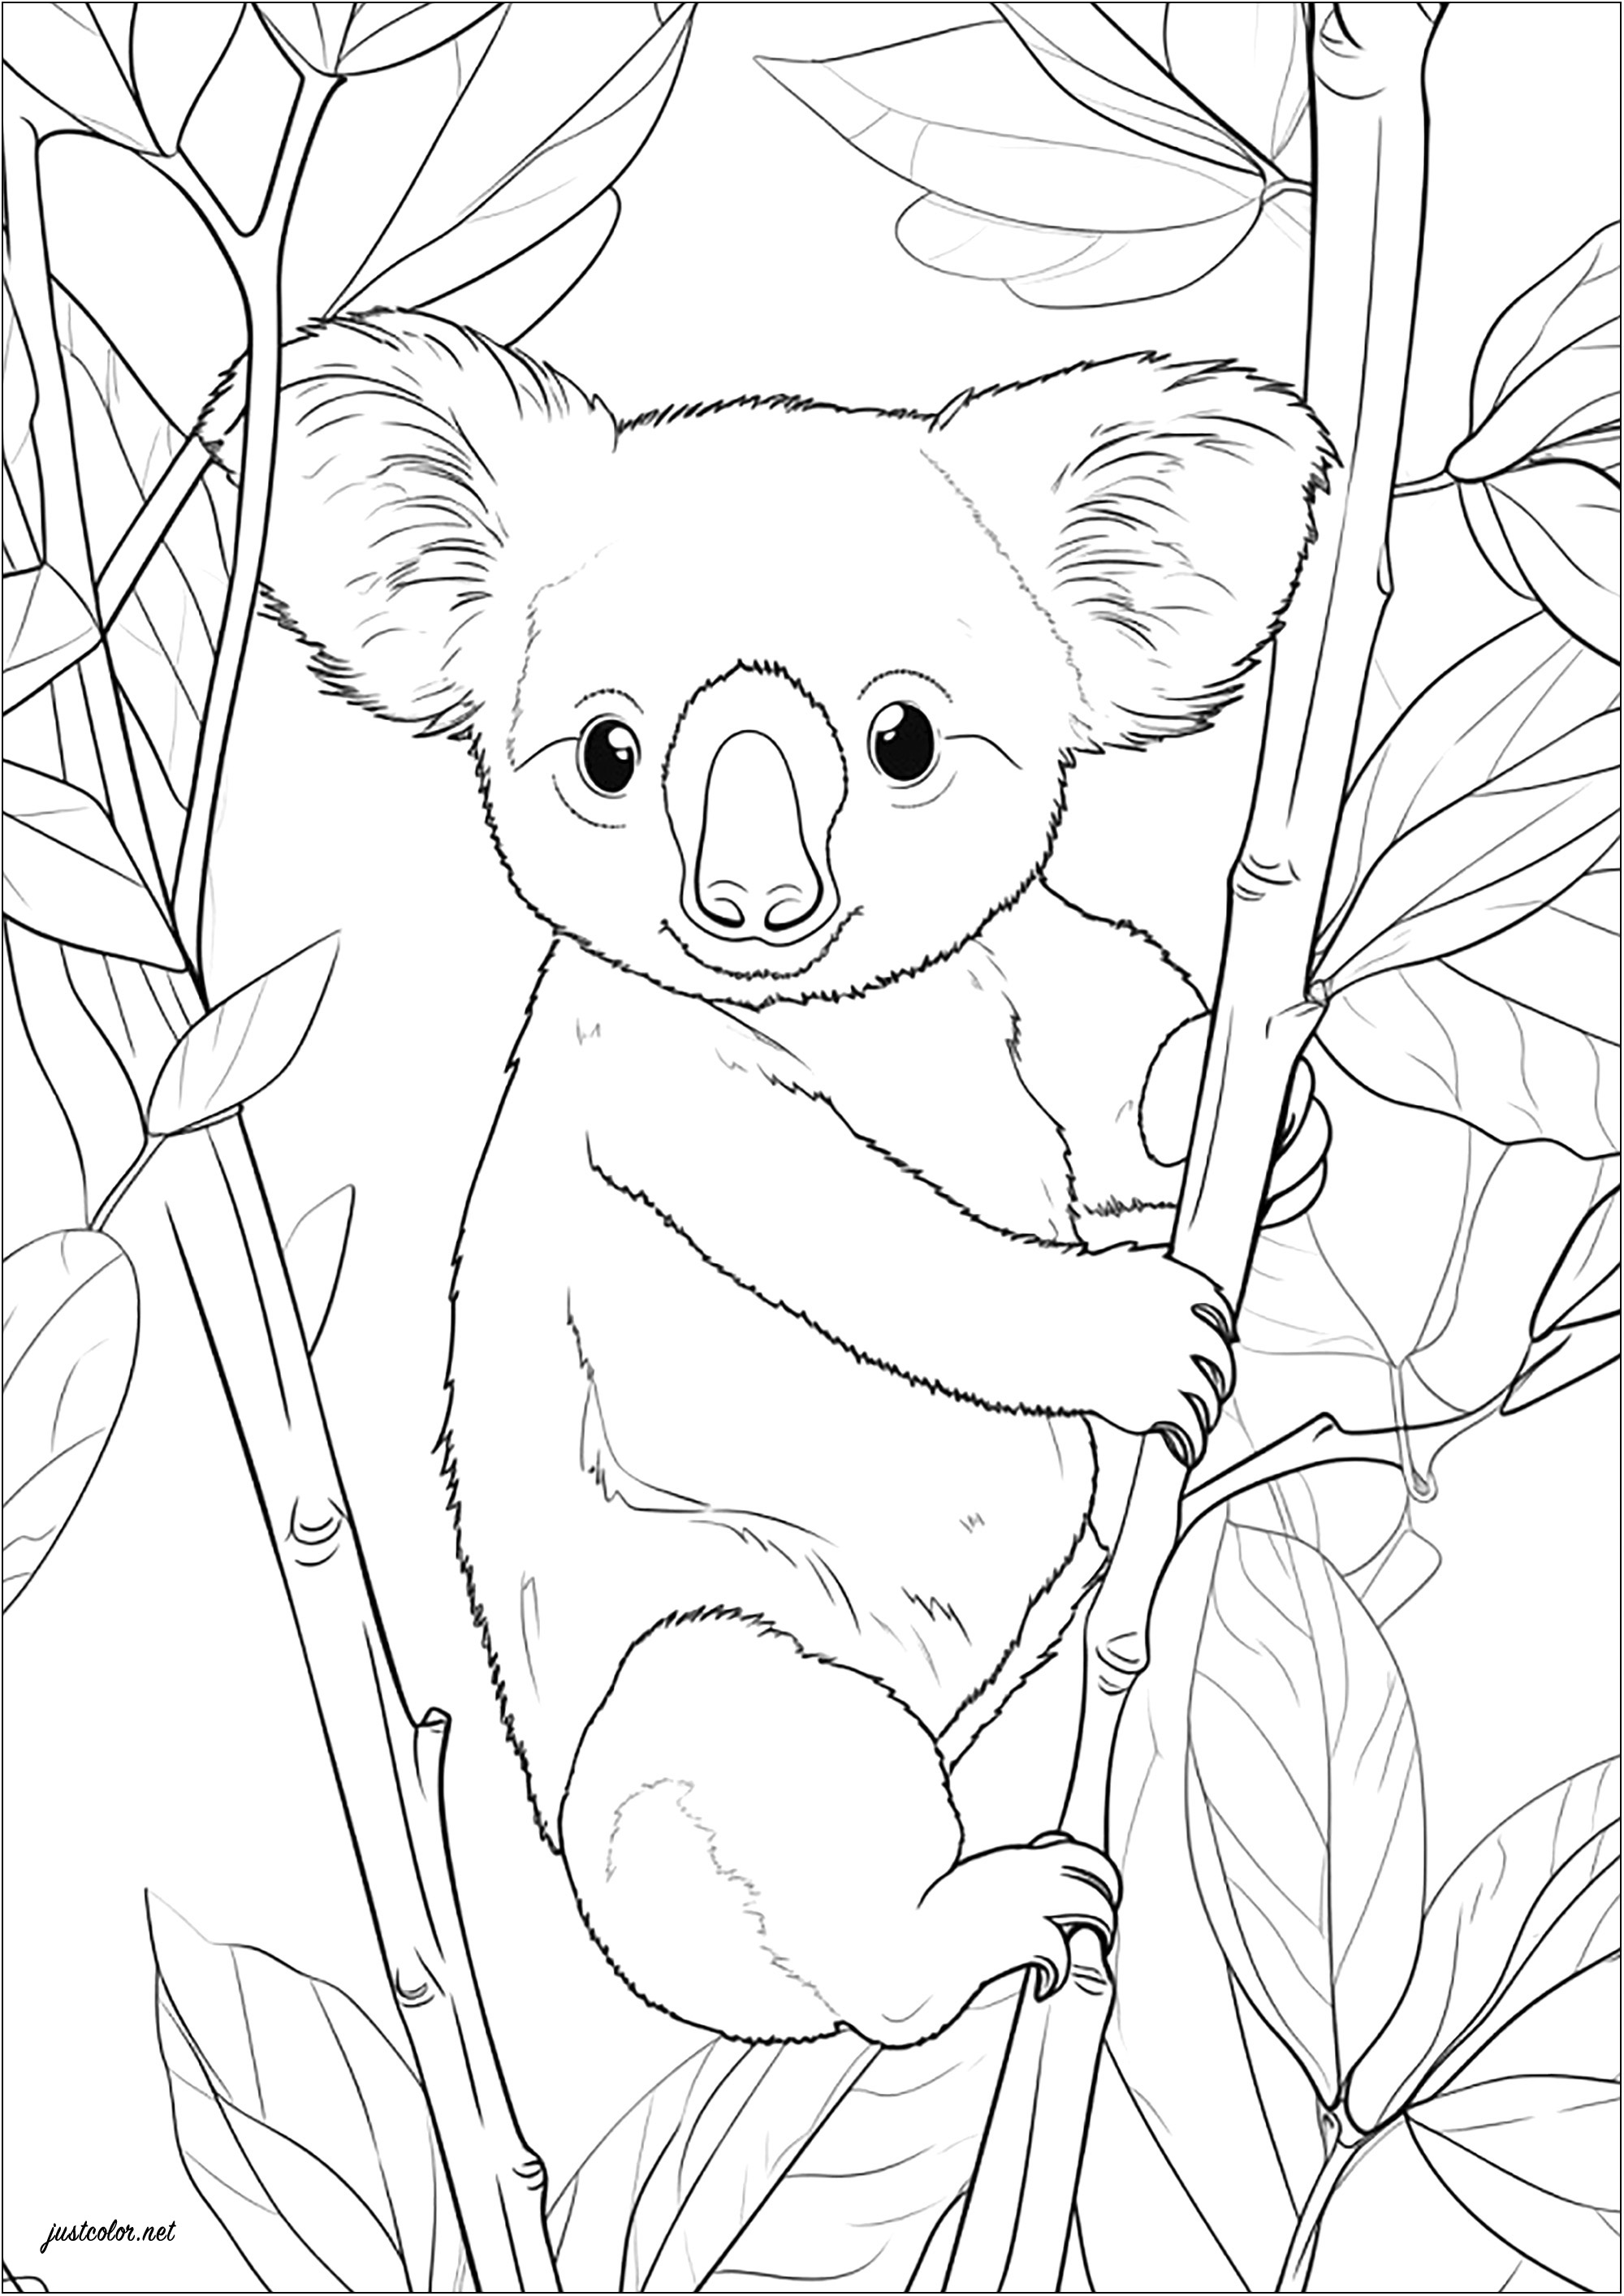 Realistic koala clinging to a bamboo branch